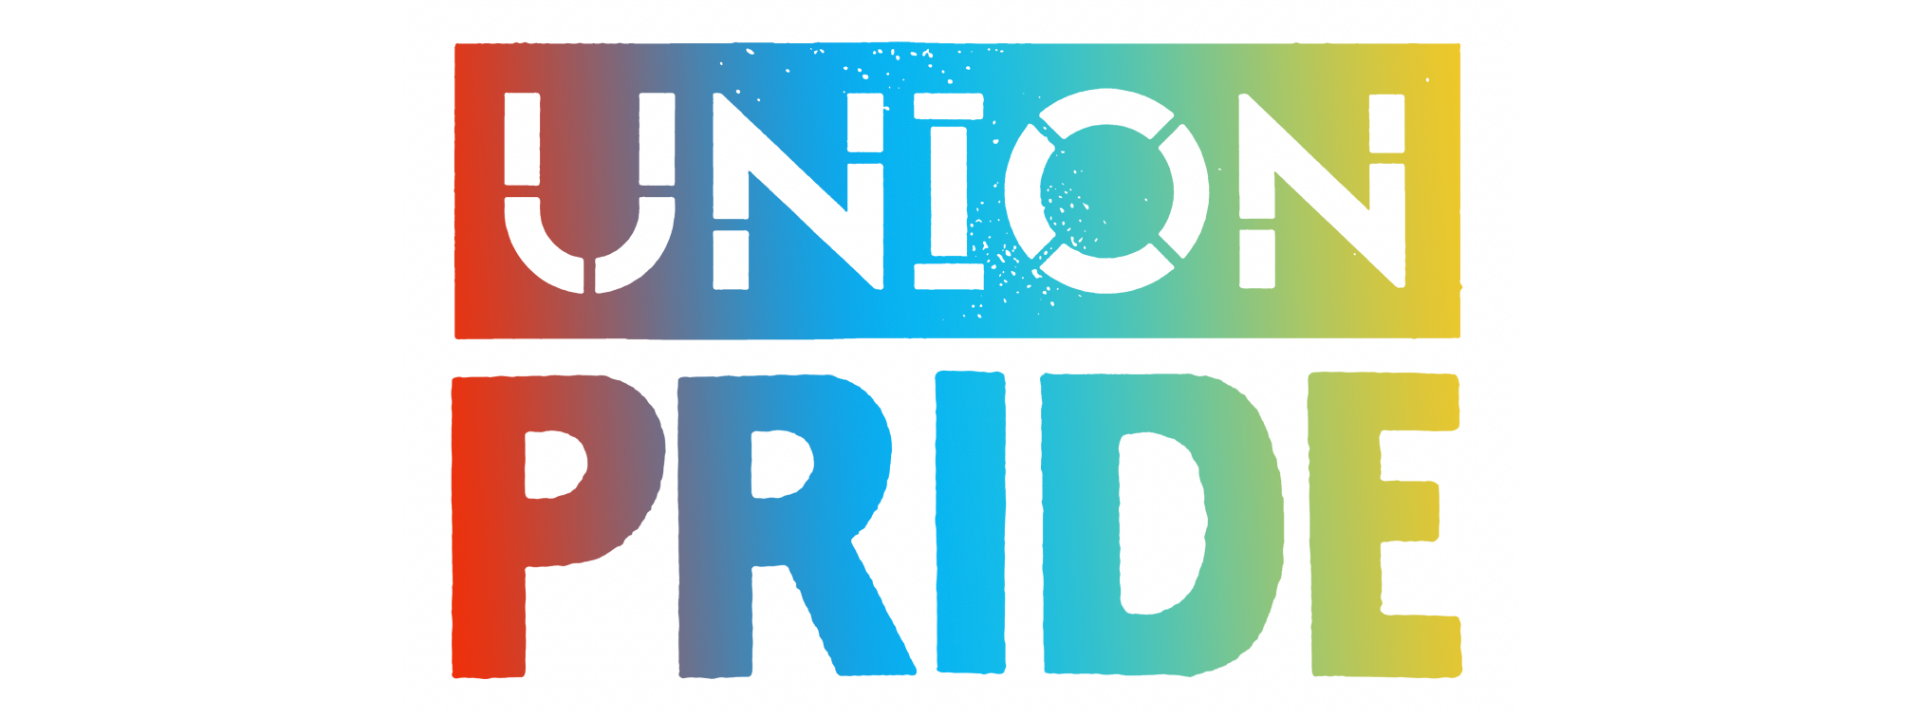 Union Pride Logo in rainbow colors banner